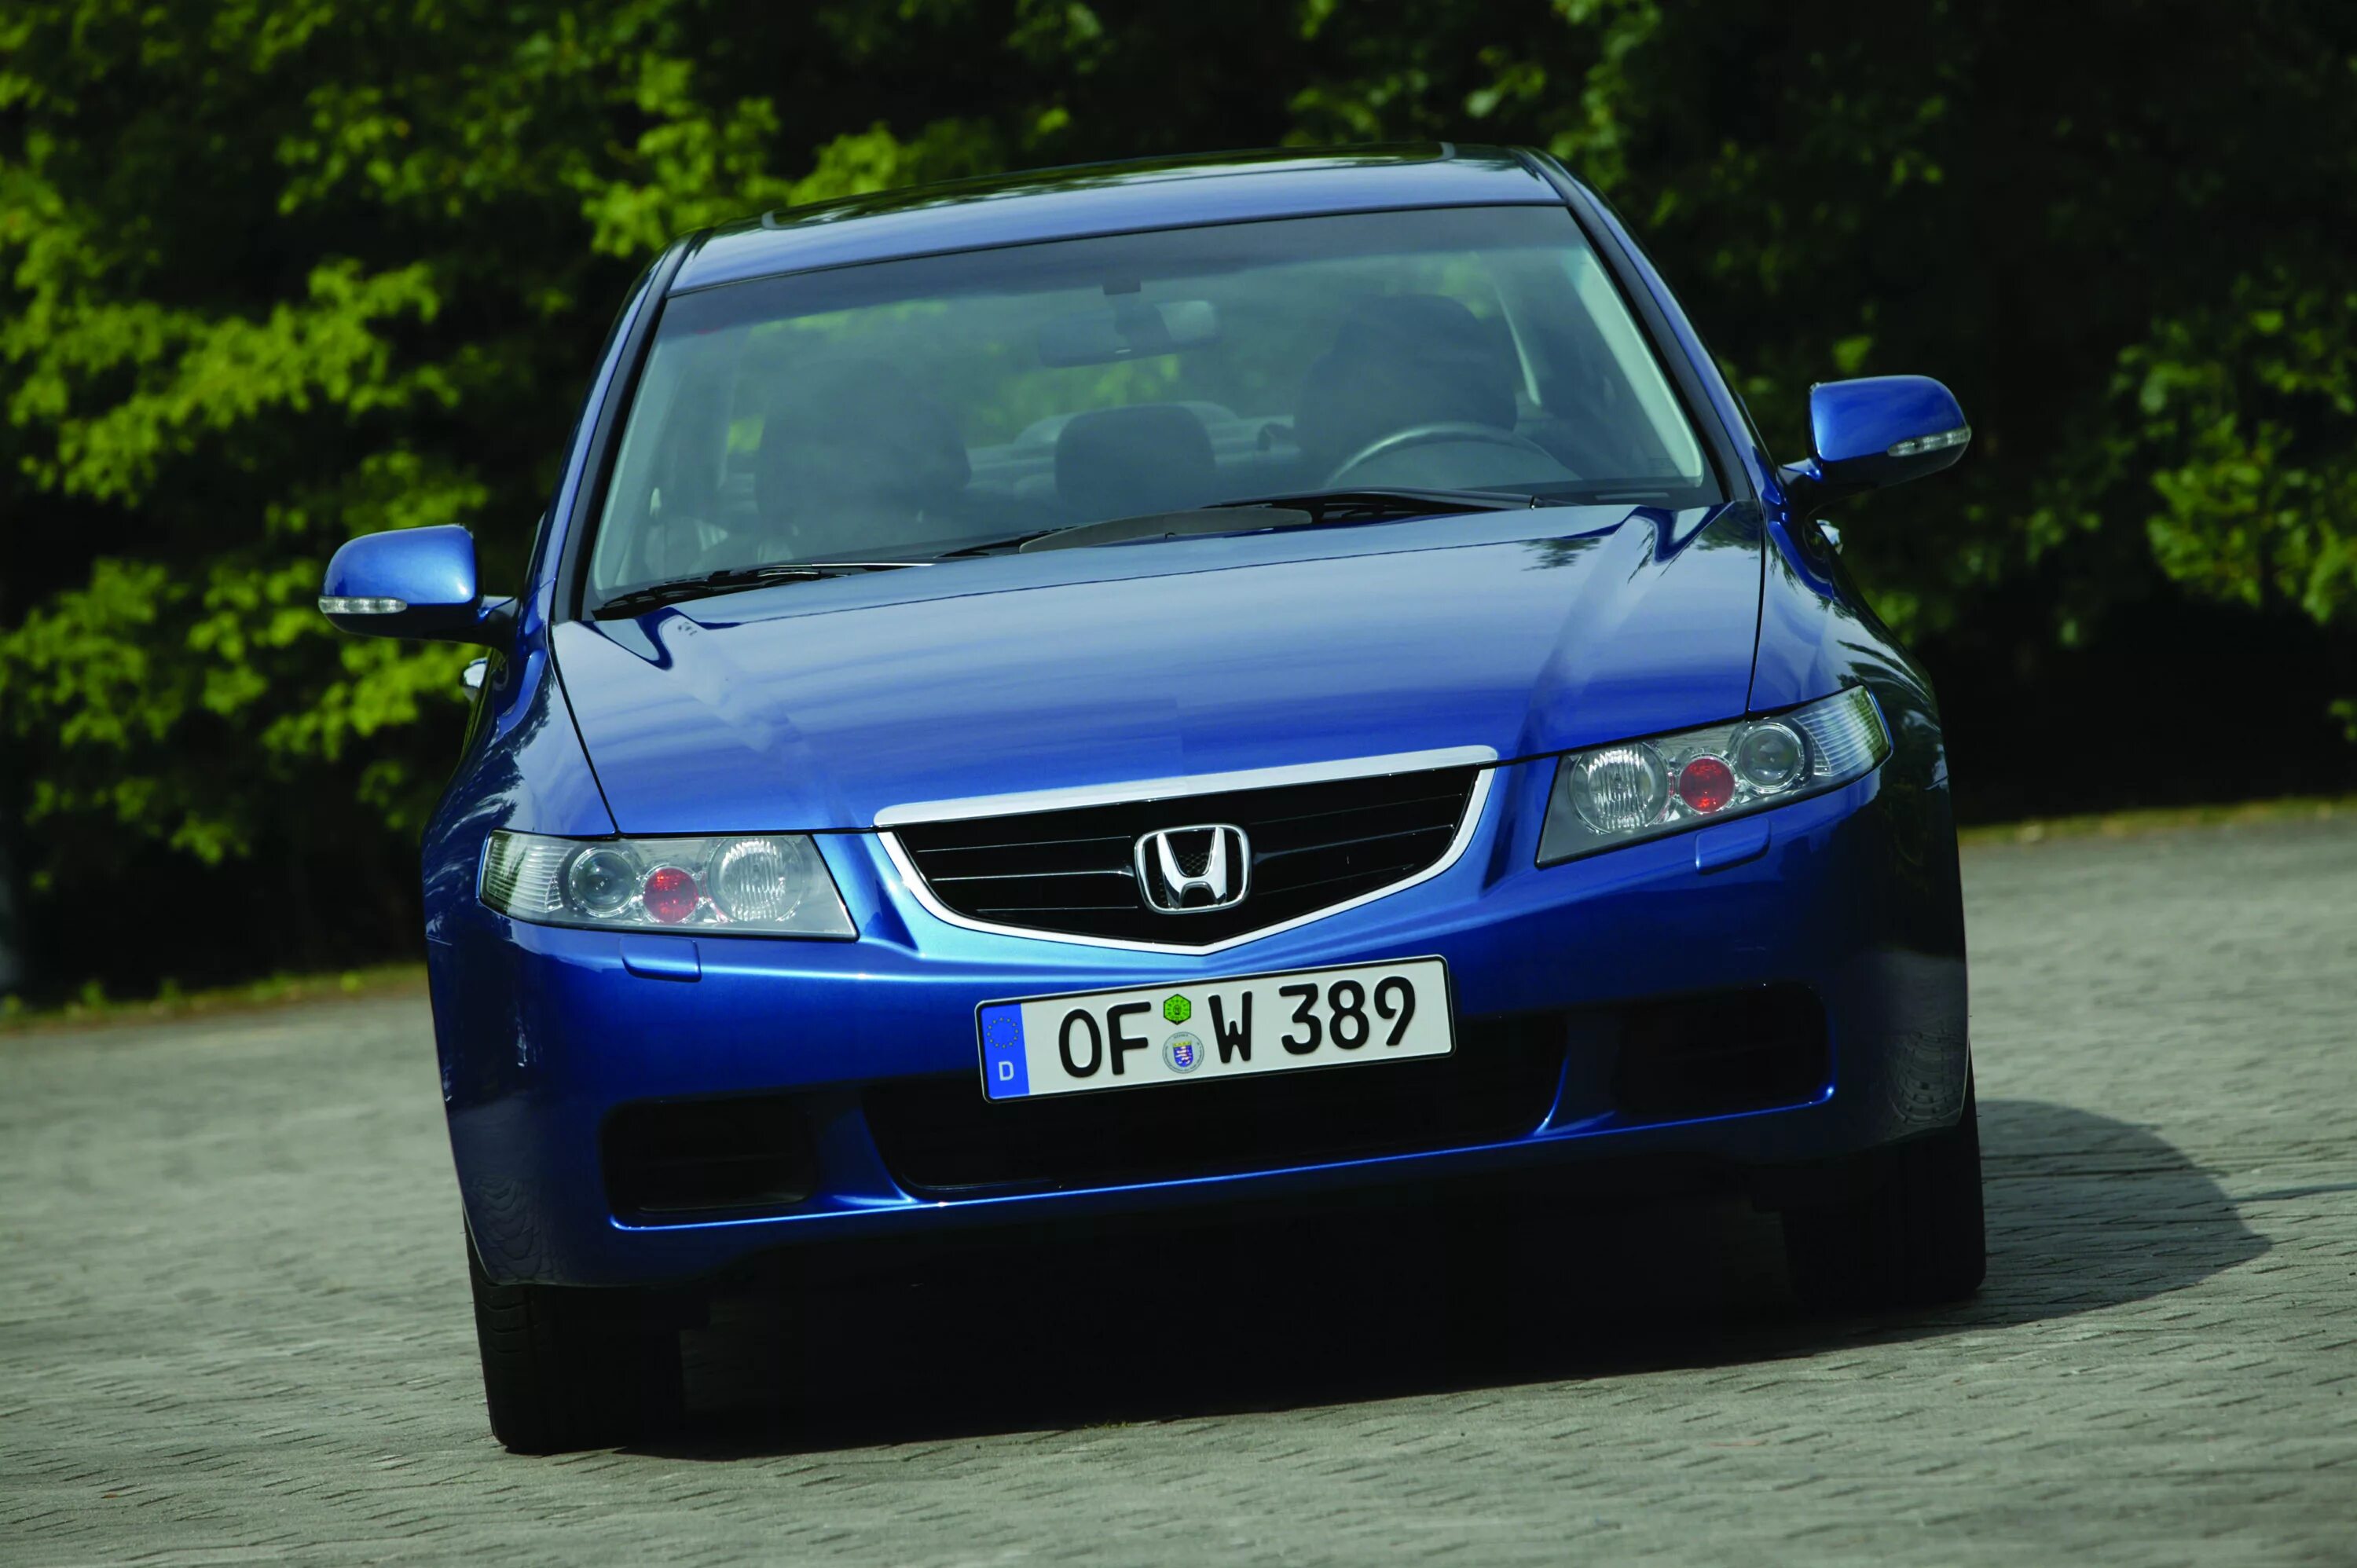 Honda Accord VII 2002-2008. Honda Accord 2003 sedan Europe. Honda Accord 7 поколение. Honda Accord 2. Хонда аккорд 2.0 купить